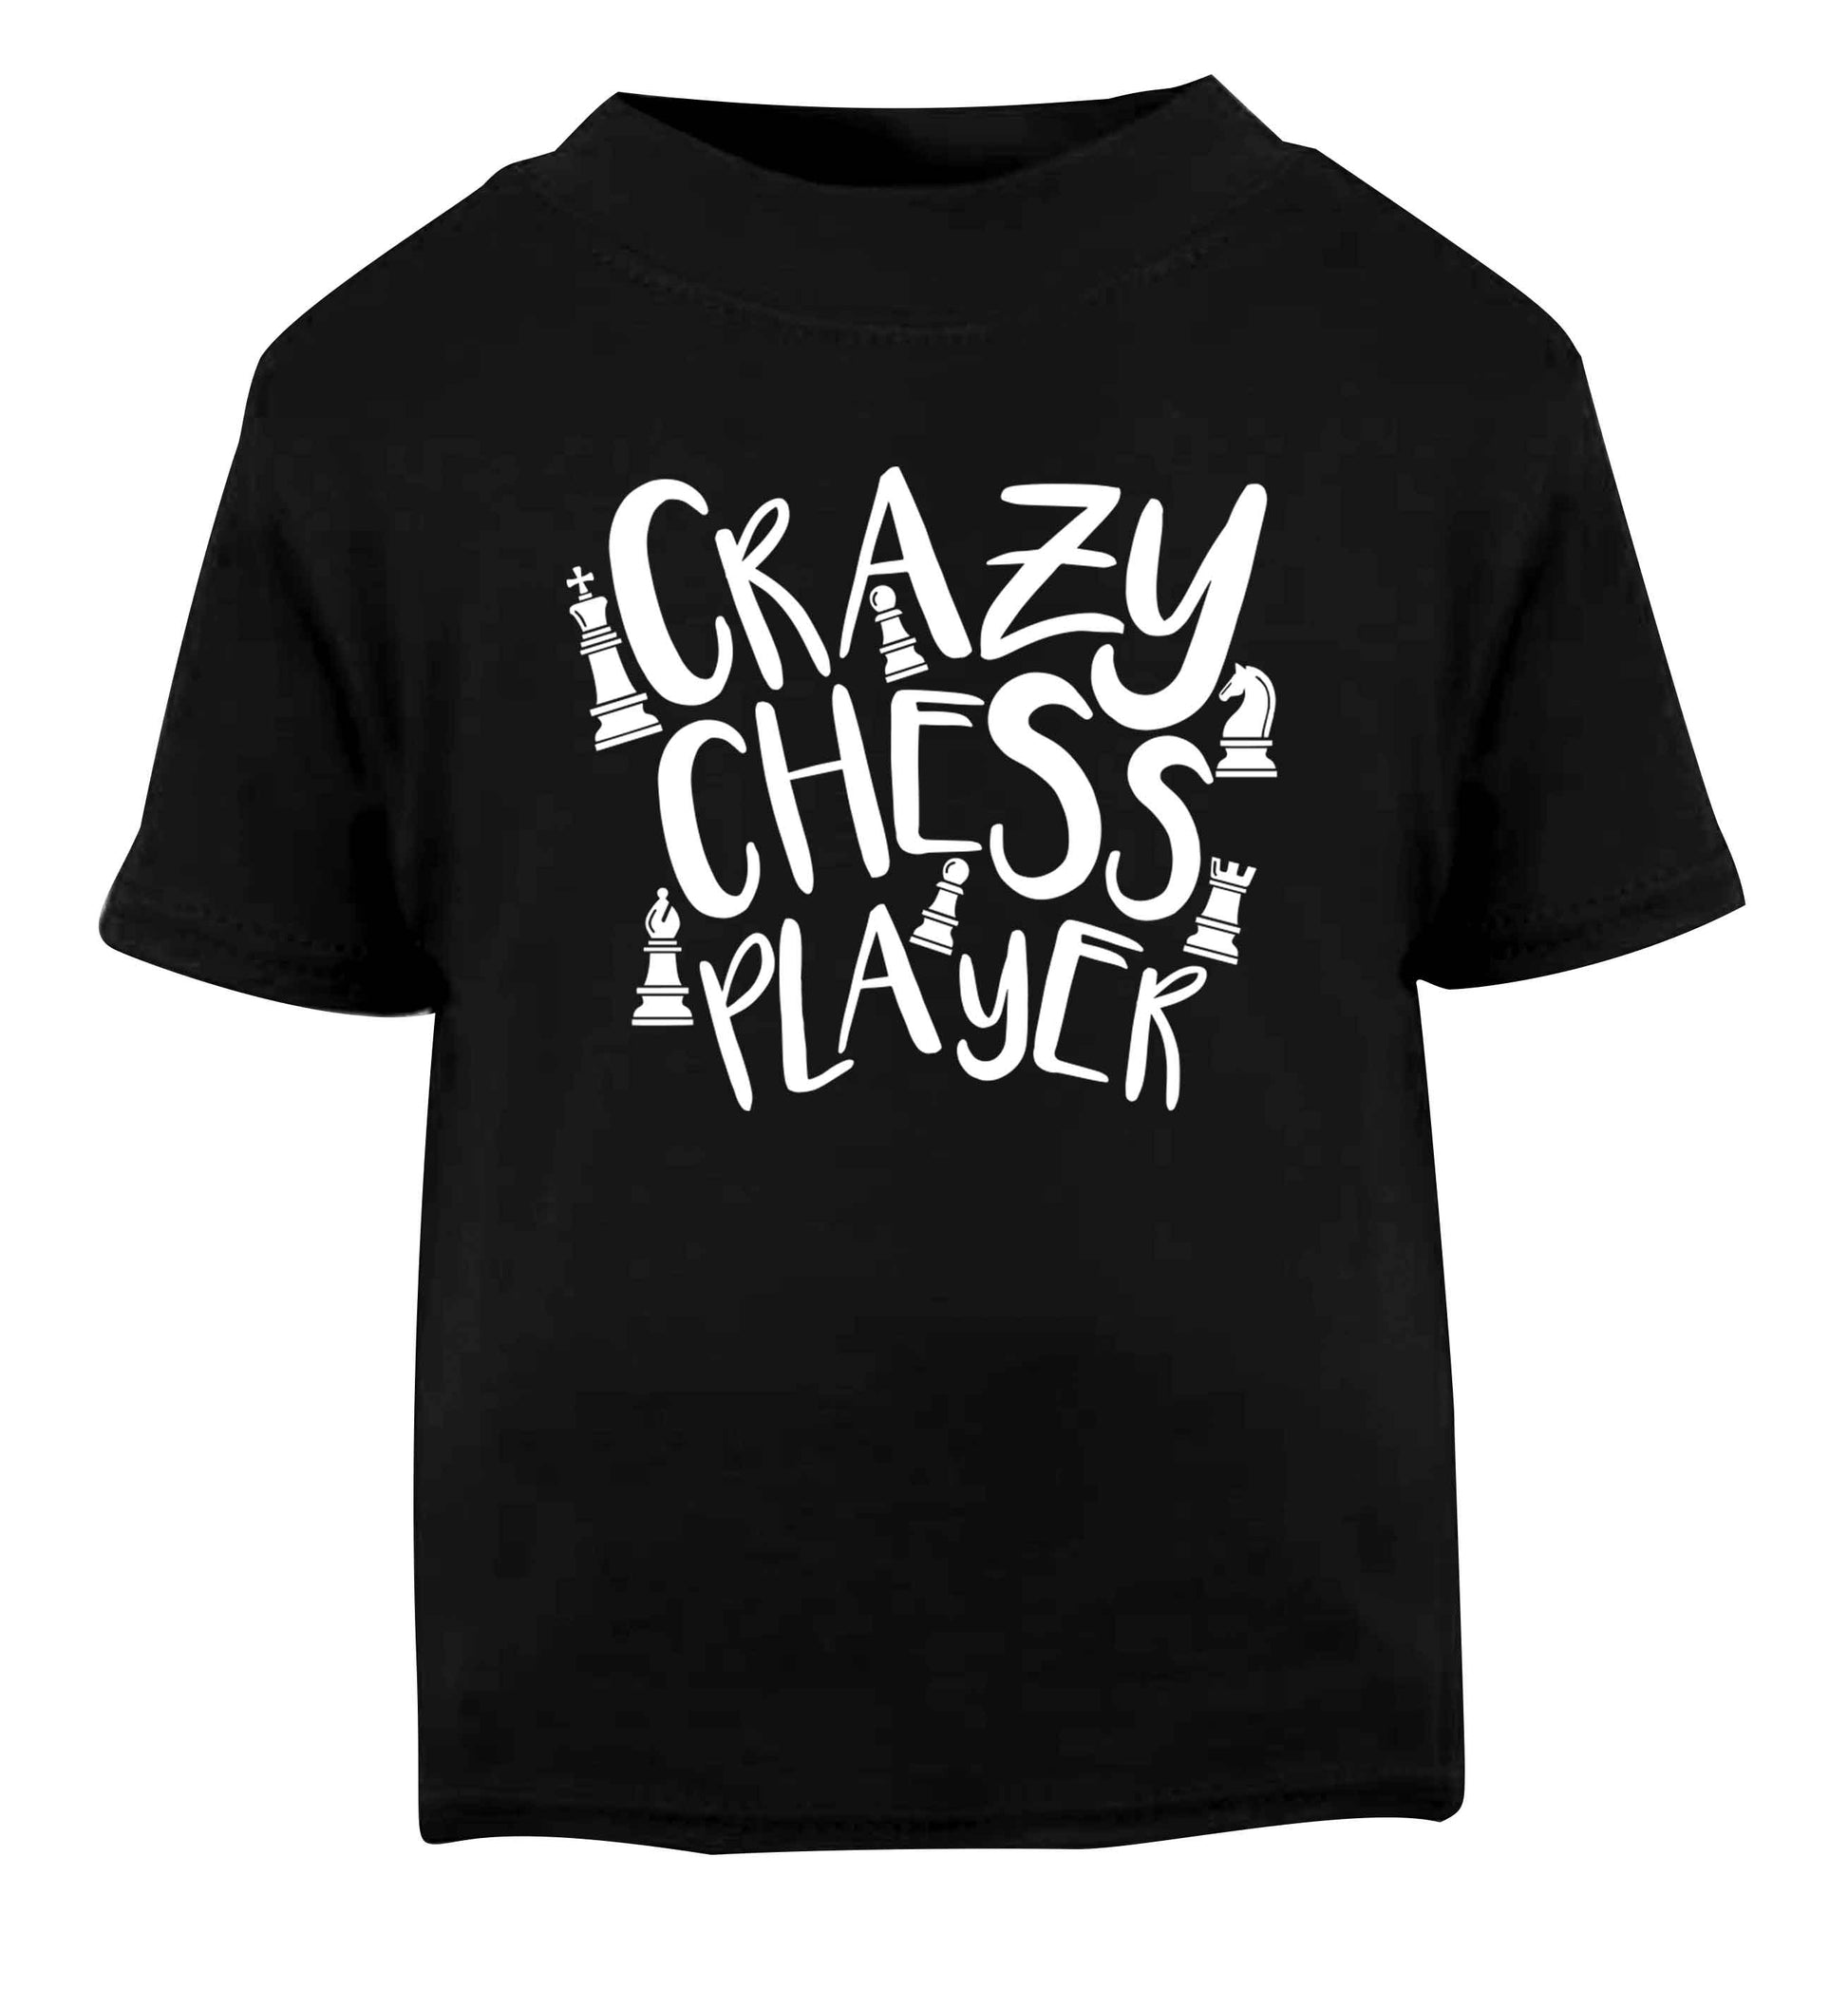 Crazy chess player Black Baby Toddler Tshirt 2 years